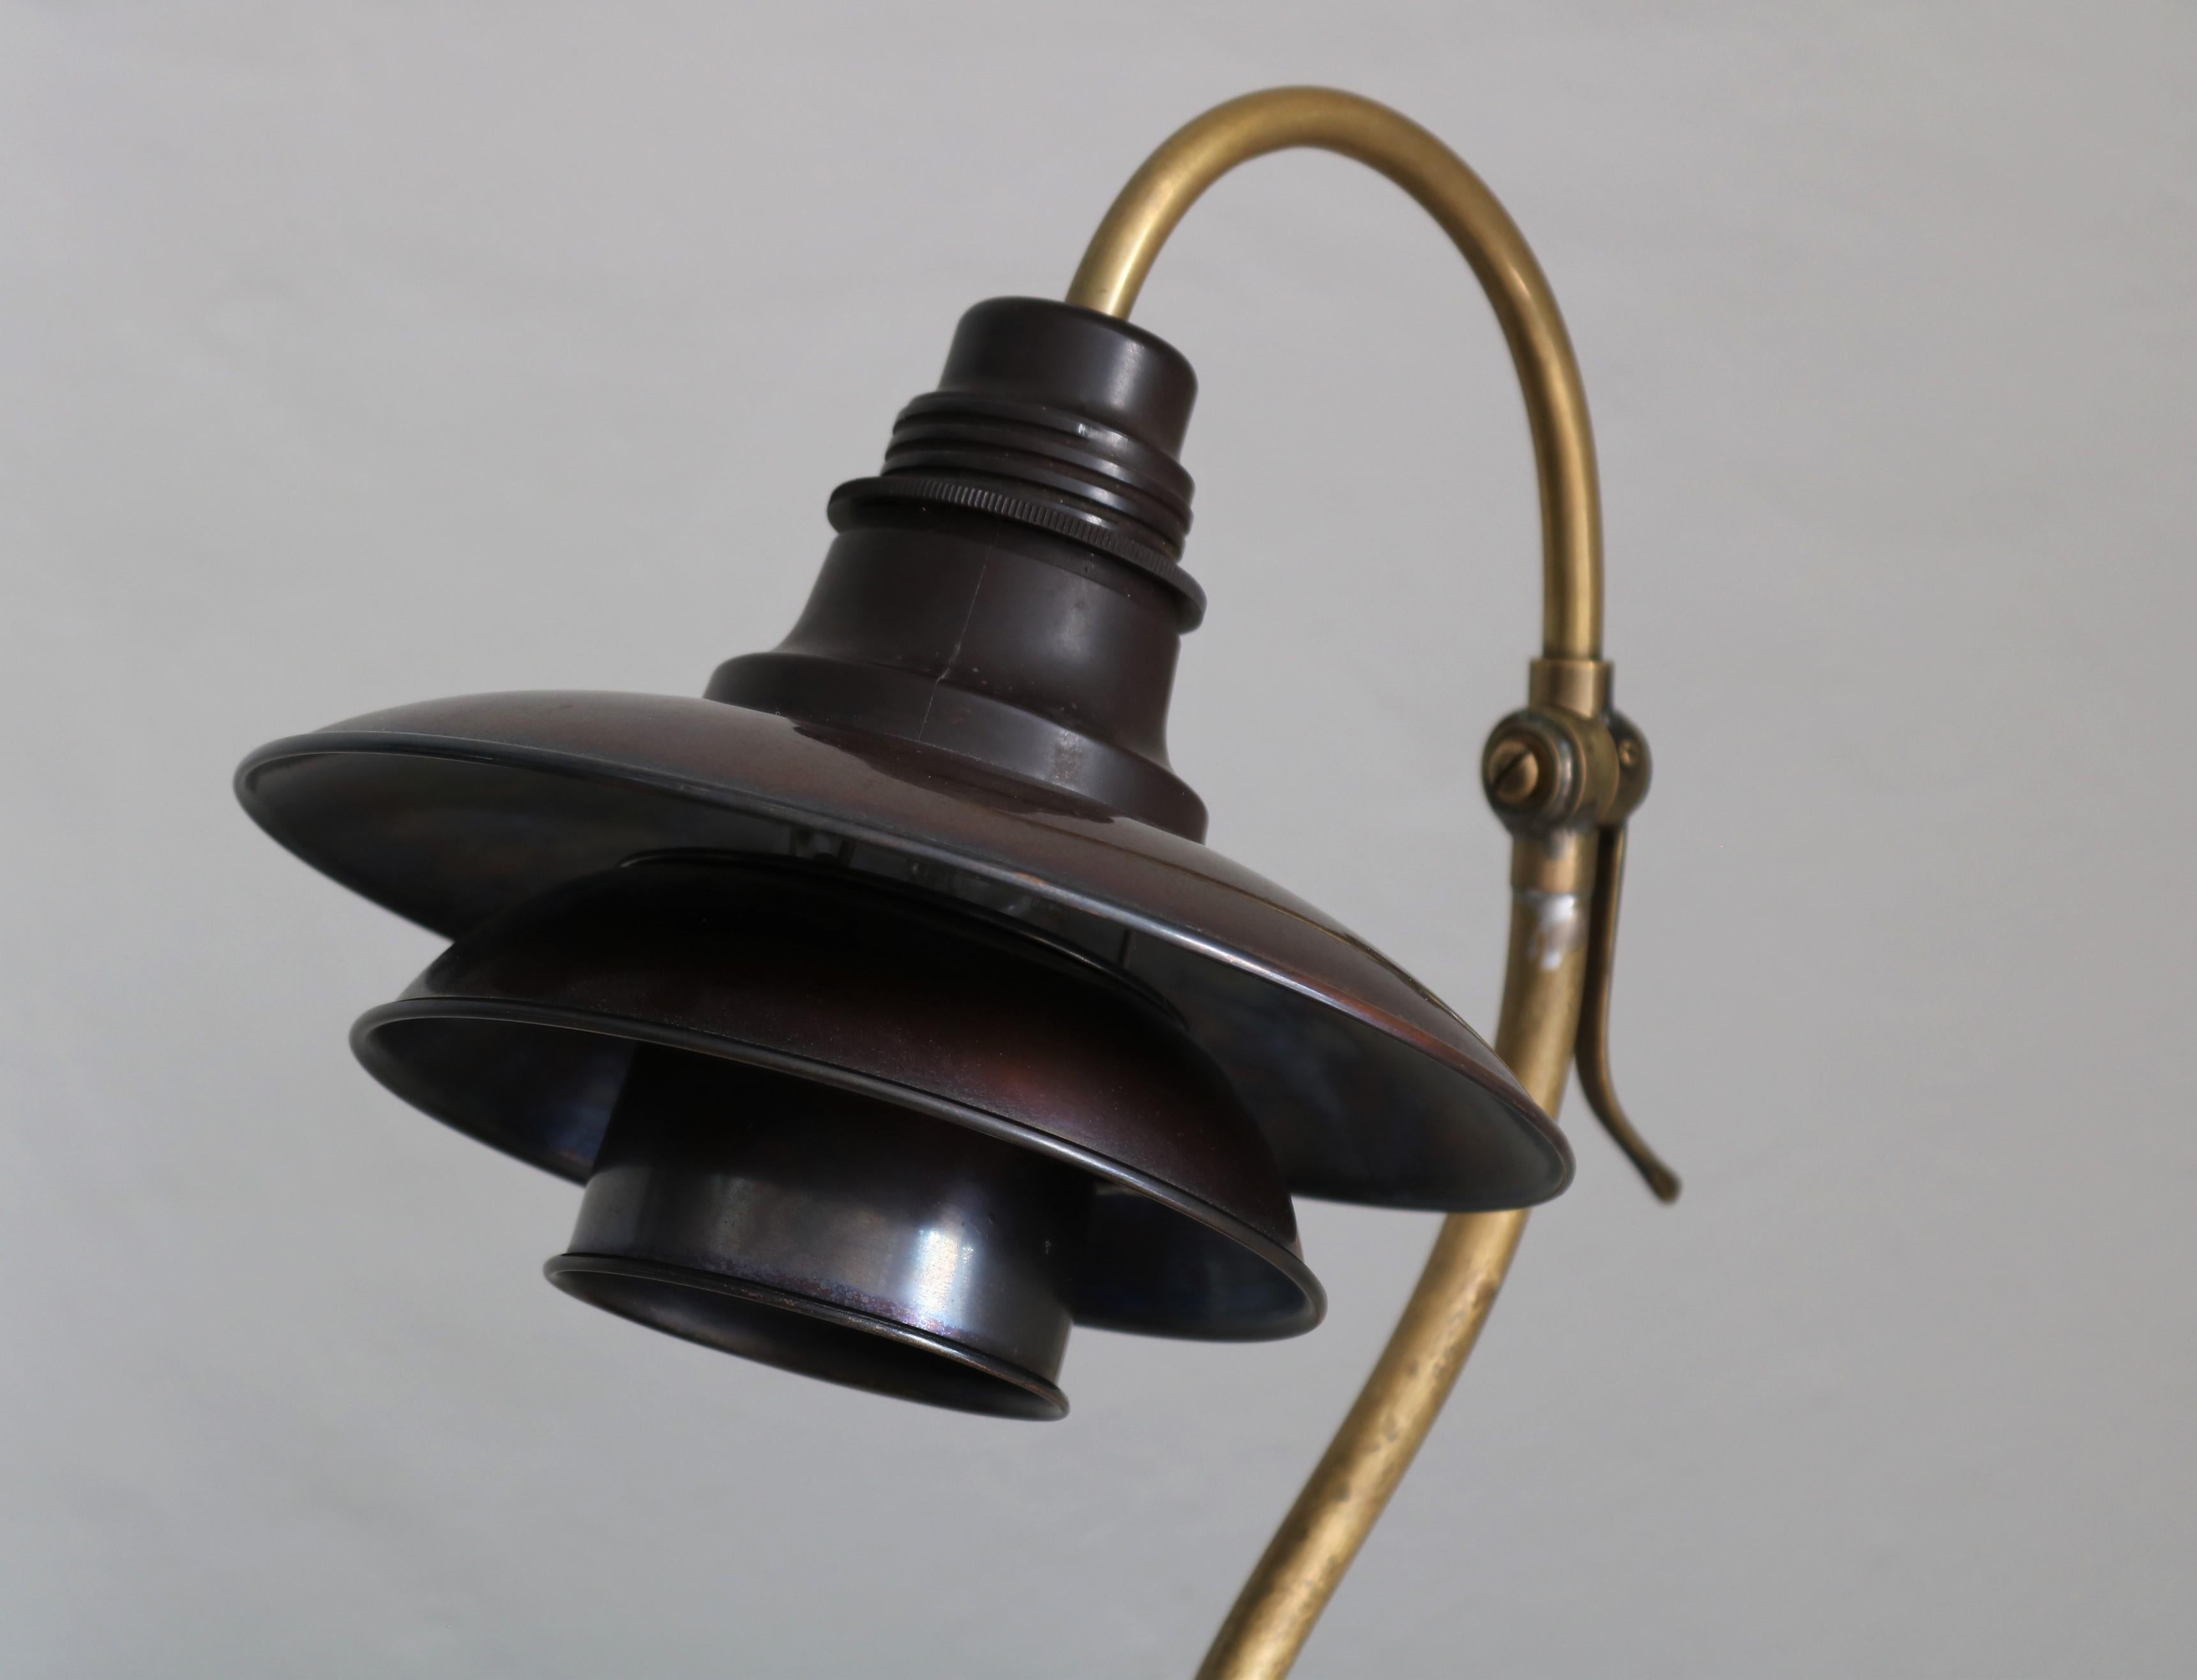 Danish Scandinavian Modern PH Desk Lamp in Brass with Copper Shades by Poul Henningsen